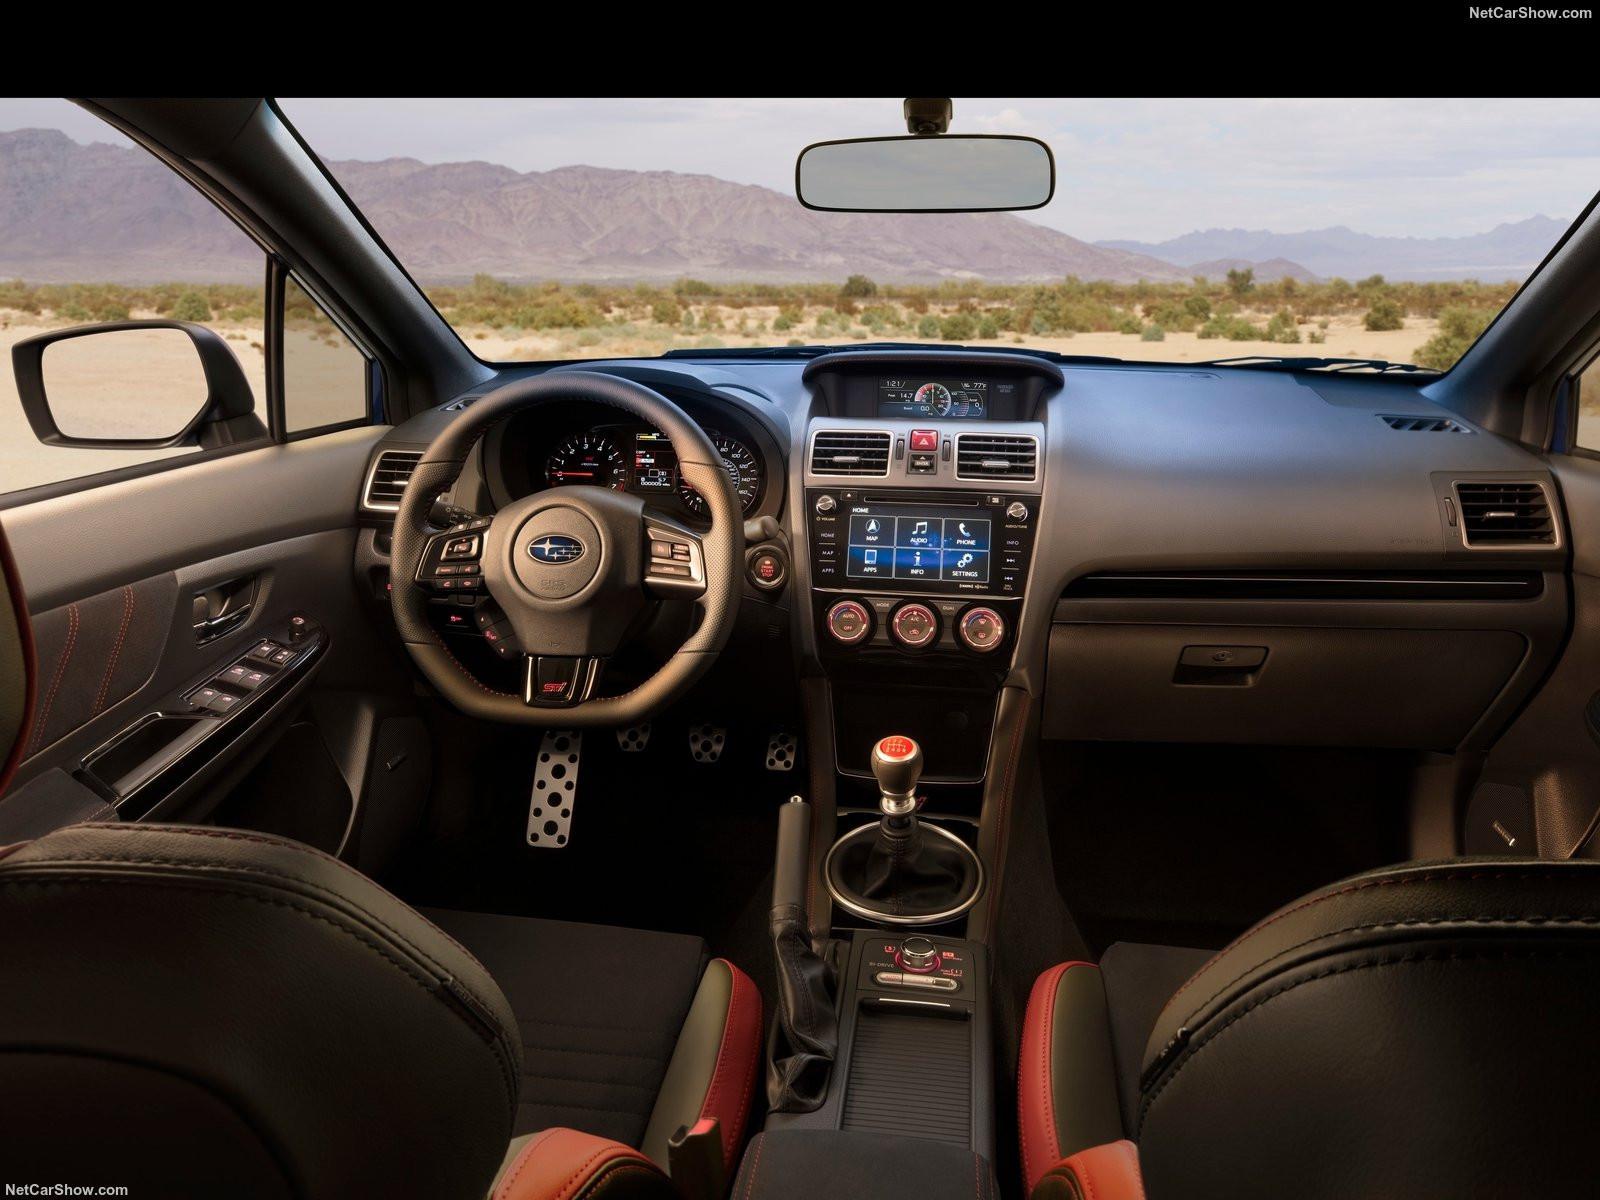 Interior Subaru WRX STI (netcarshow.com)